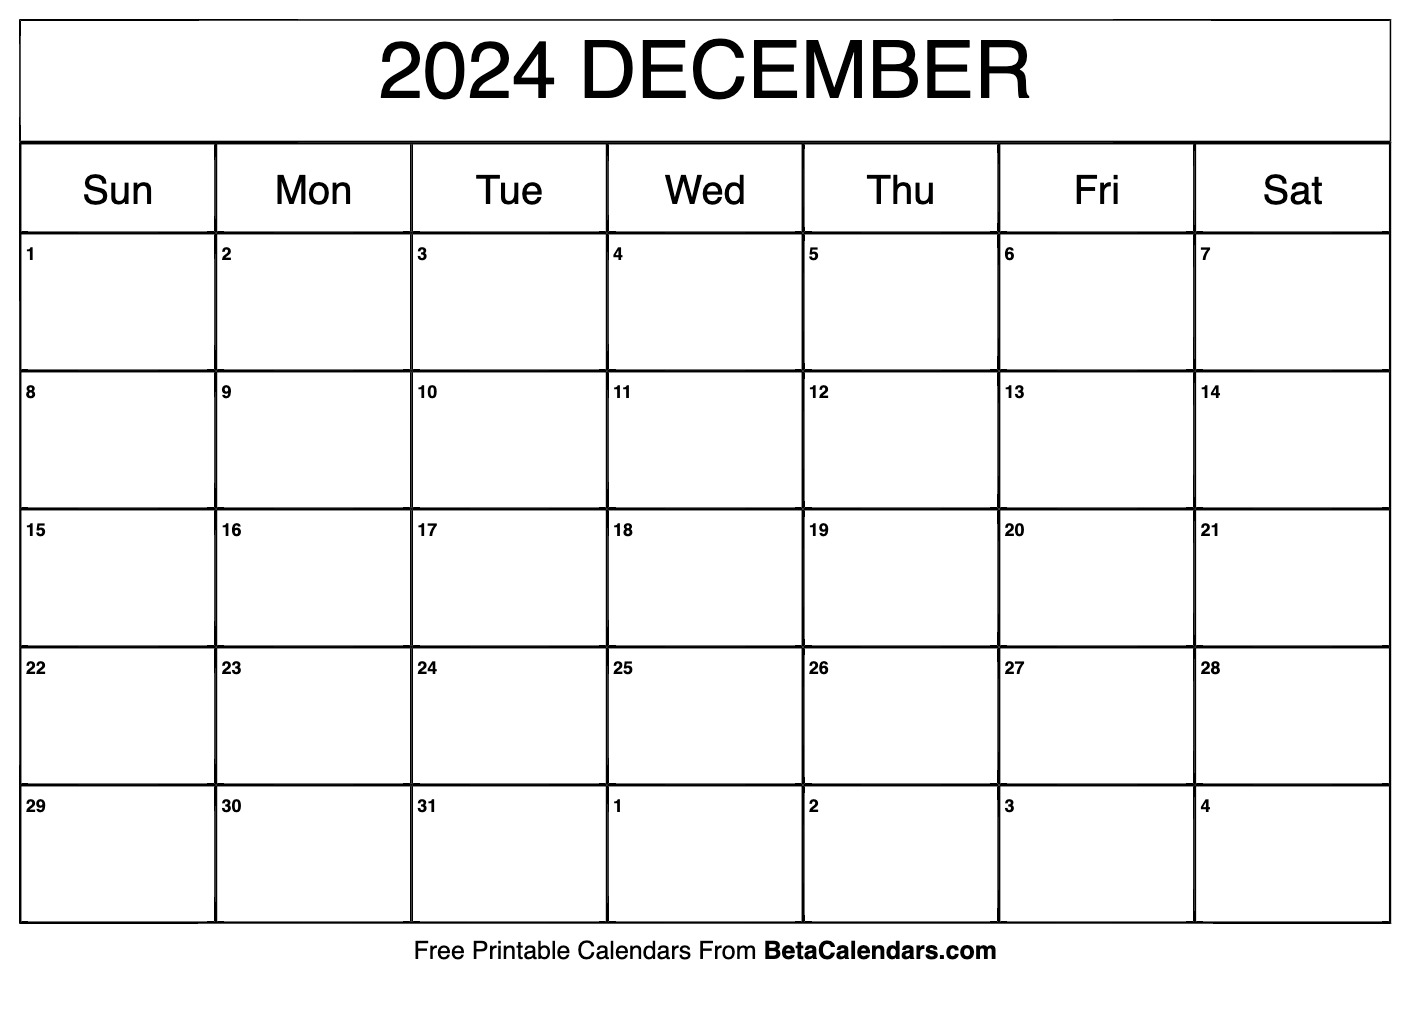 Calendar Template December 2024 Free Dedra Evaleen